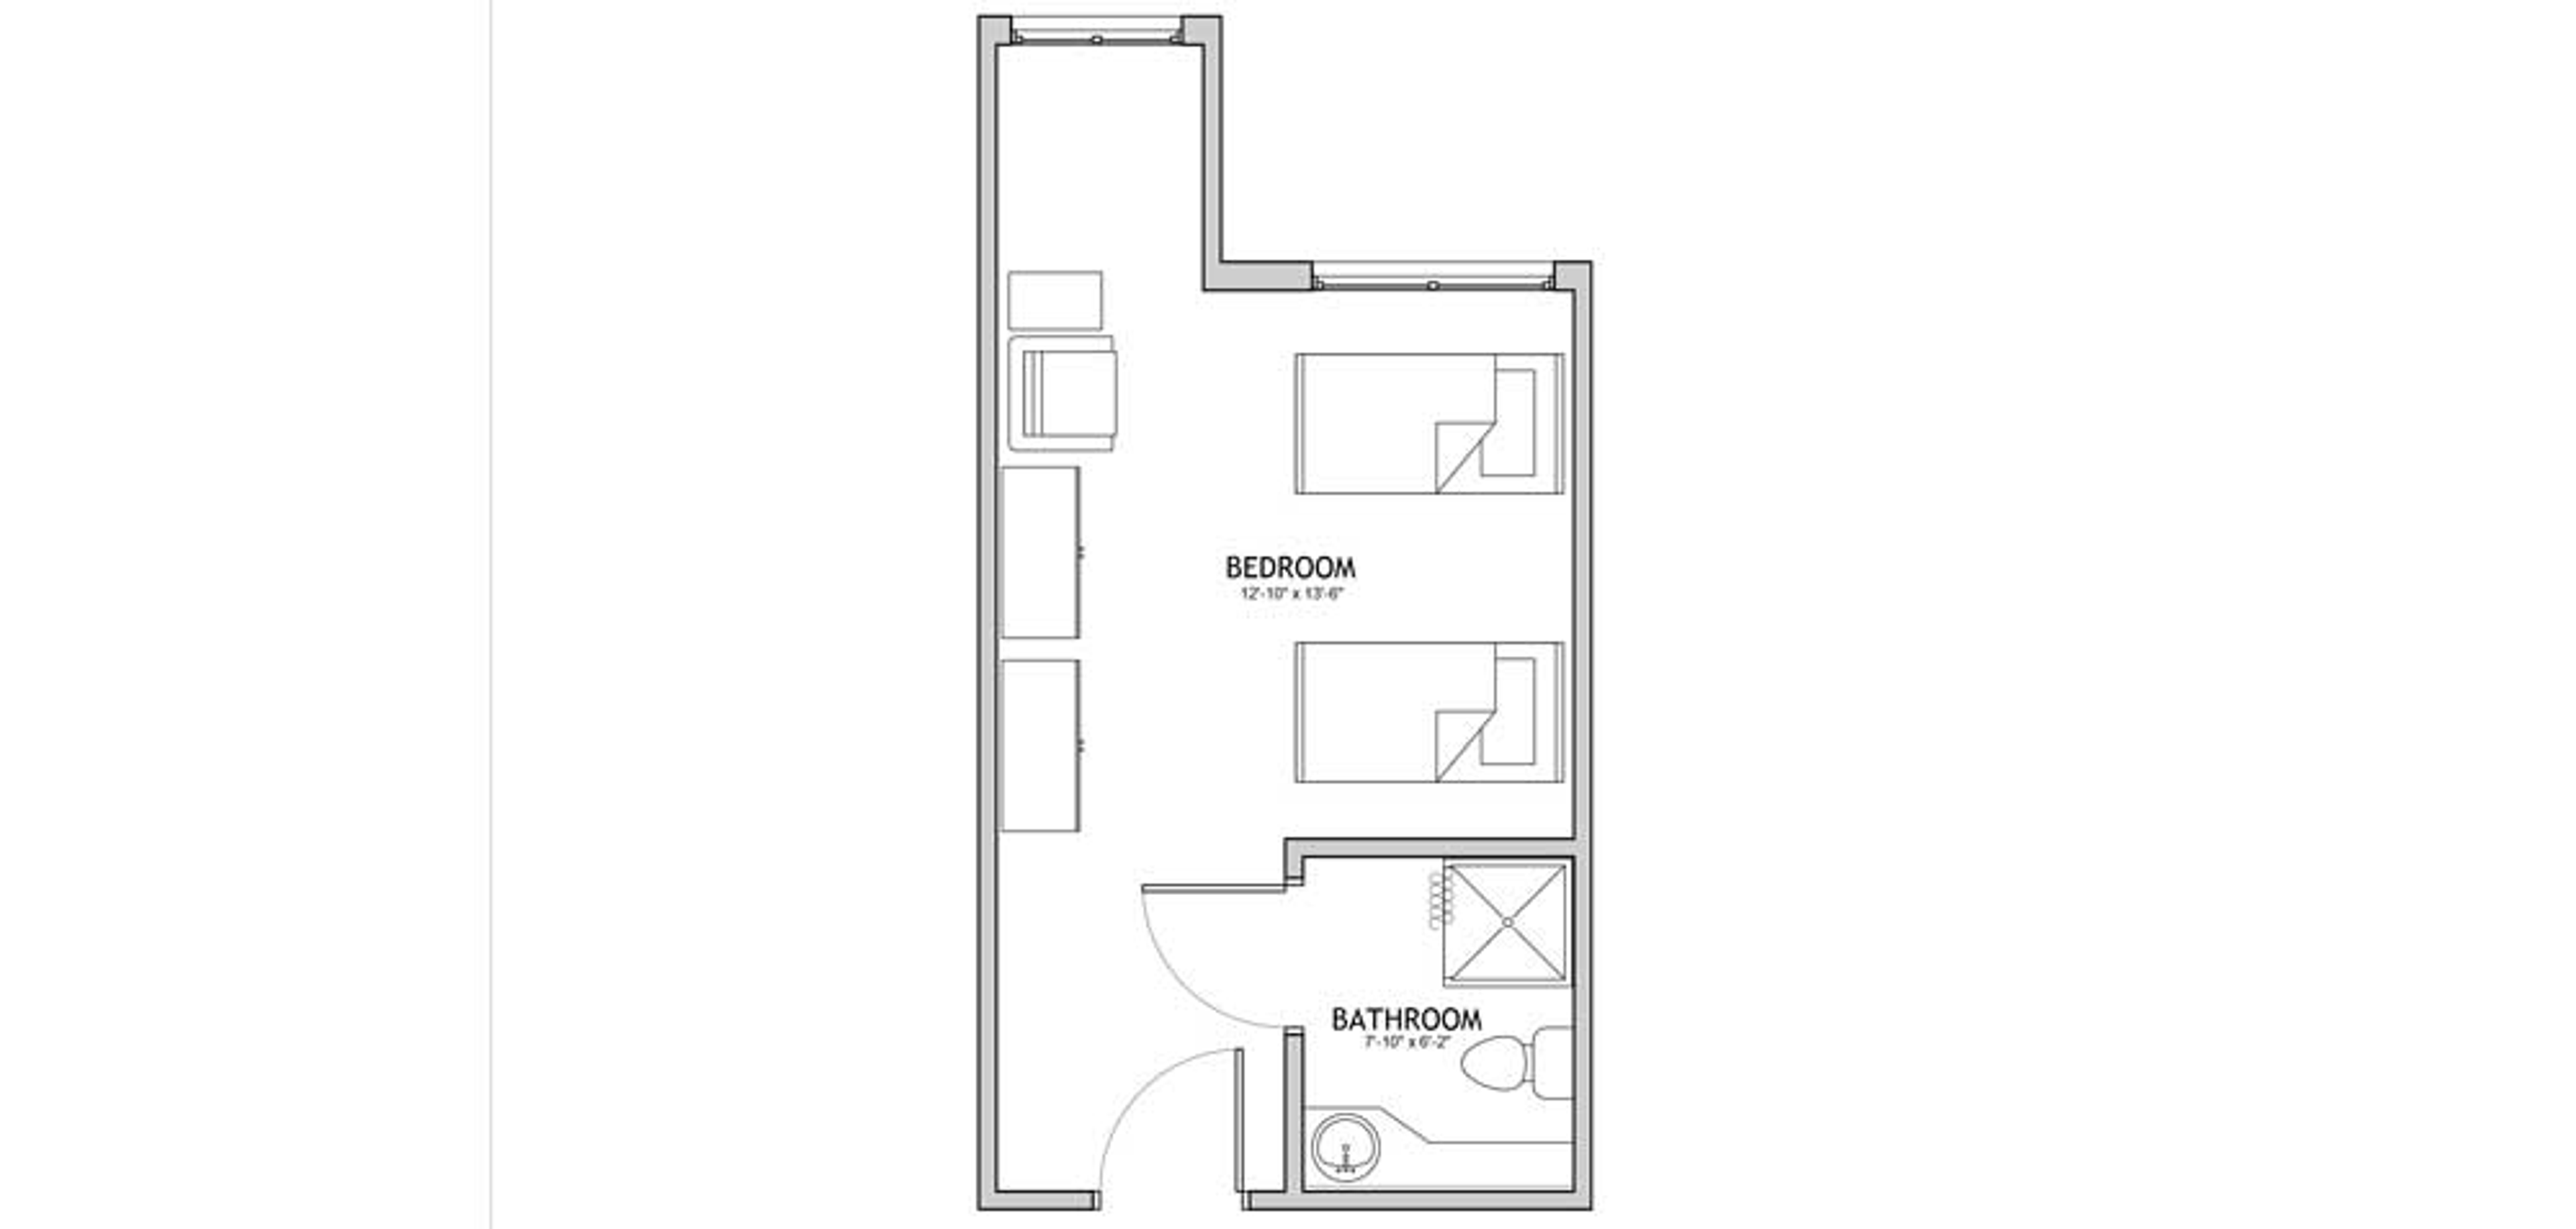 Floorplan - The Auberge at Aspen Park - Companion Suite, 340 sq. ft. Memory Care